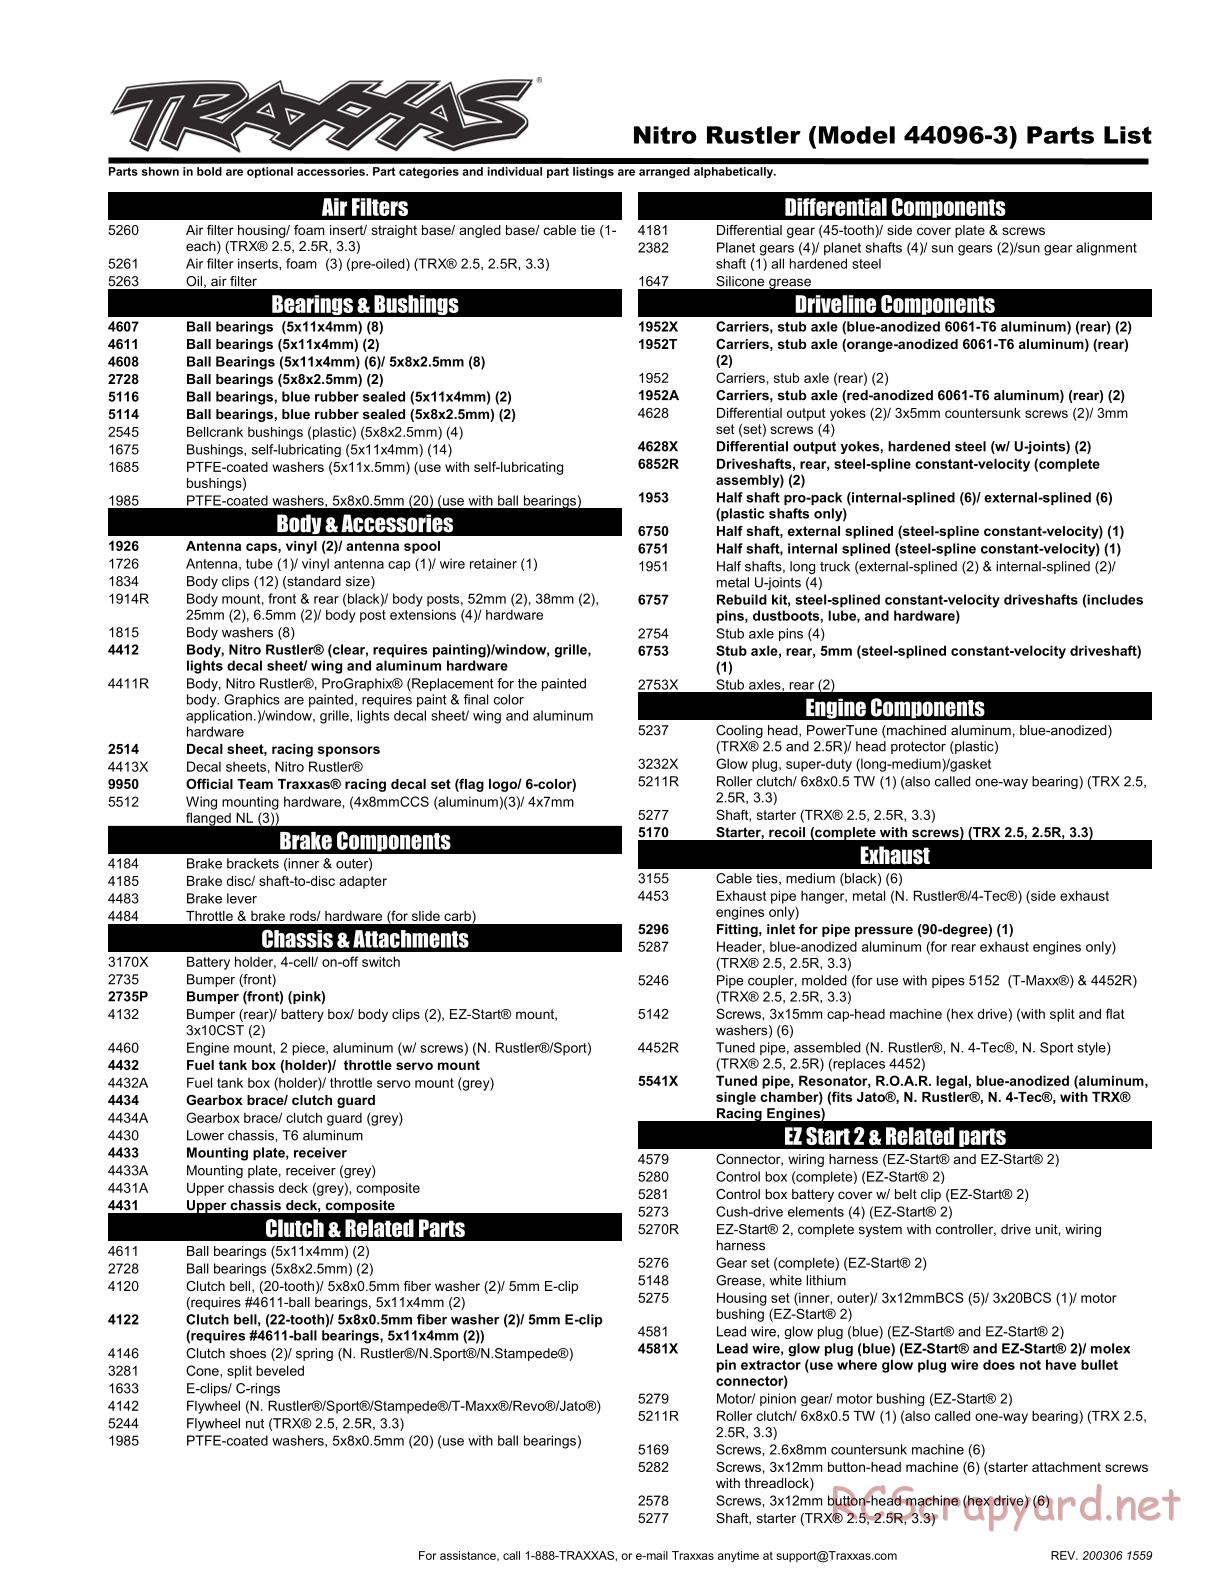 Traxxas - Nitro Rustler TSM (2016) - Parts List - Page 1